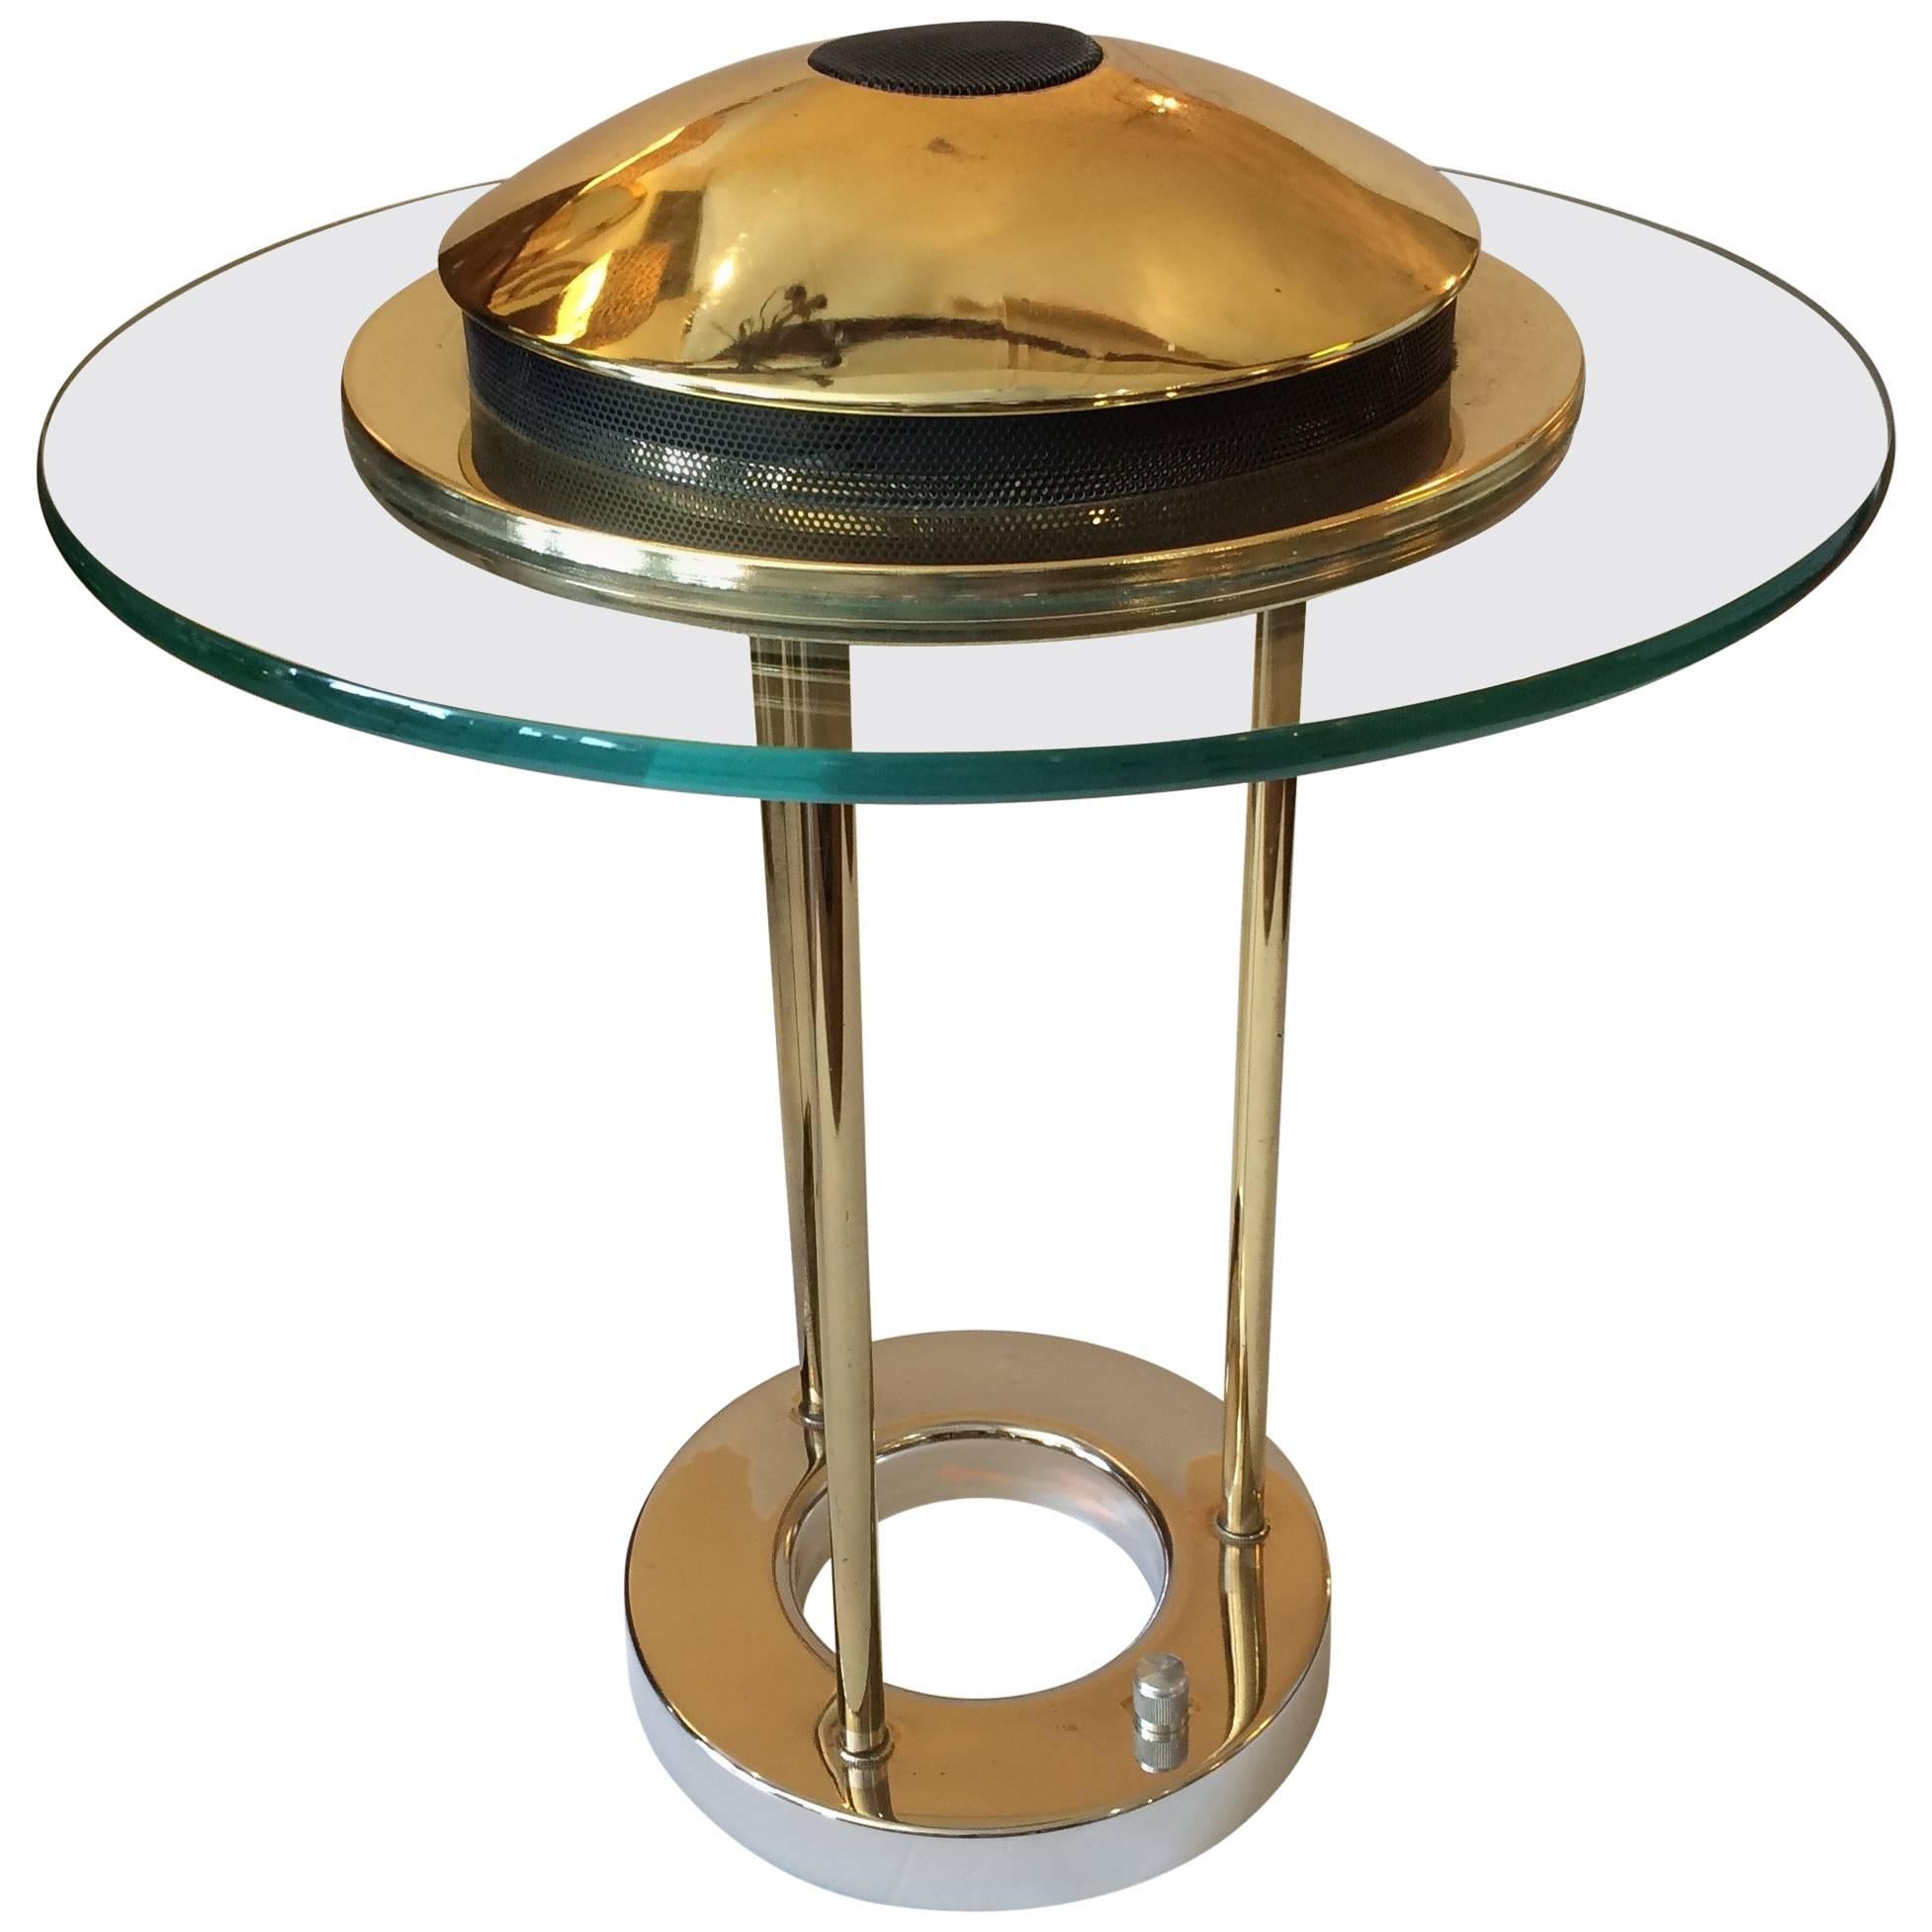 Iconic Saturn Table or Desk Lamp by Robert Sonneman